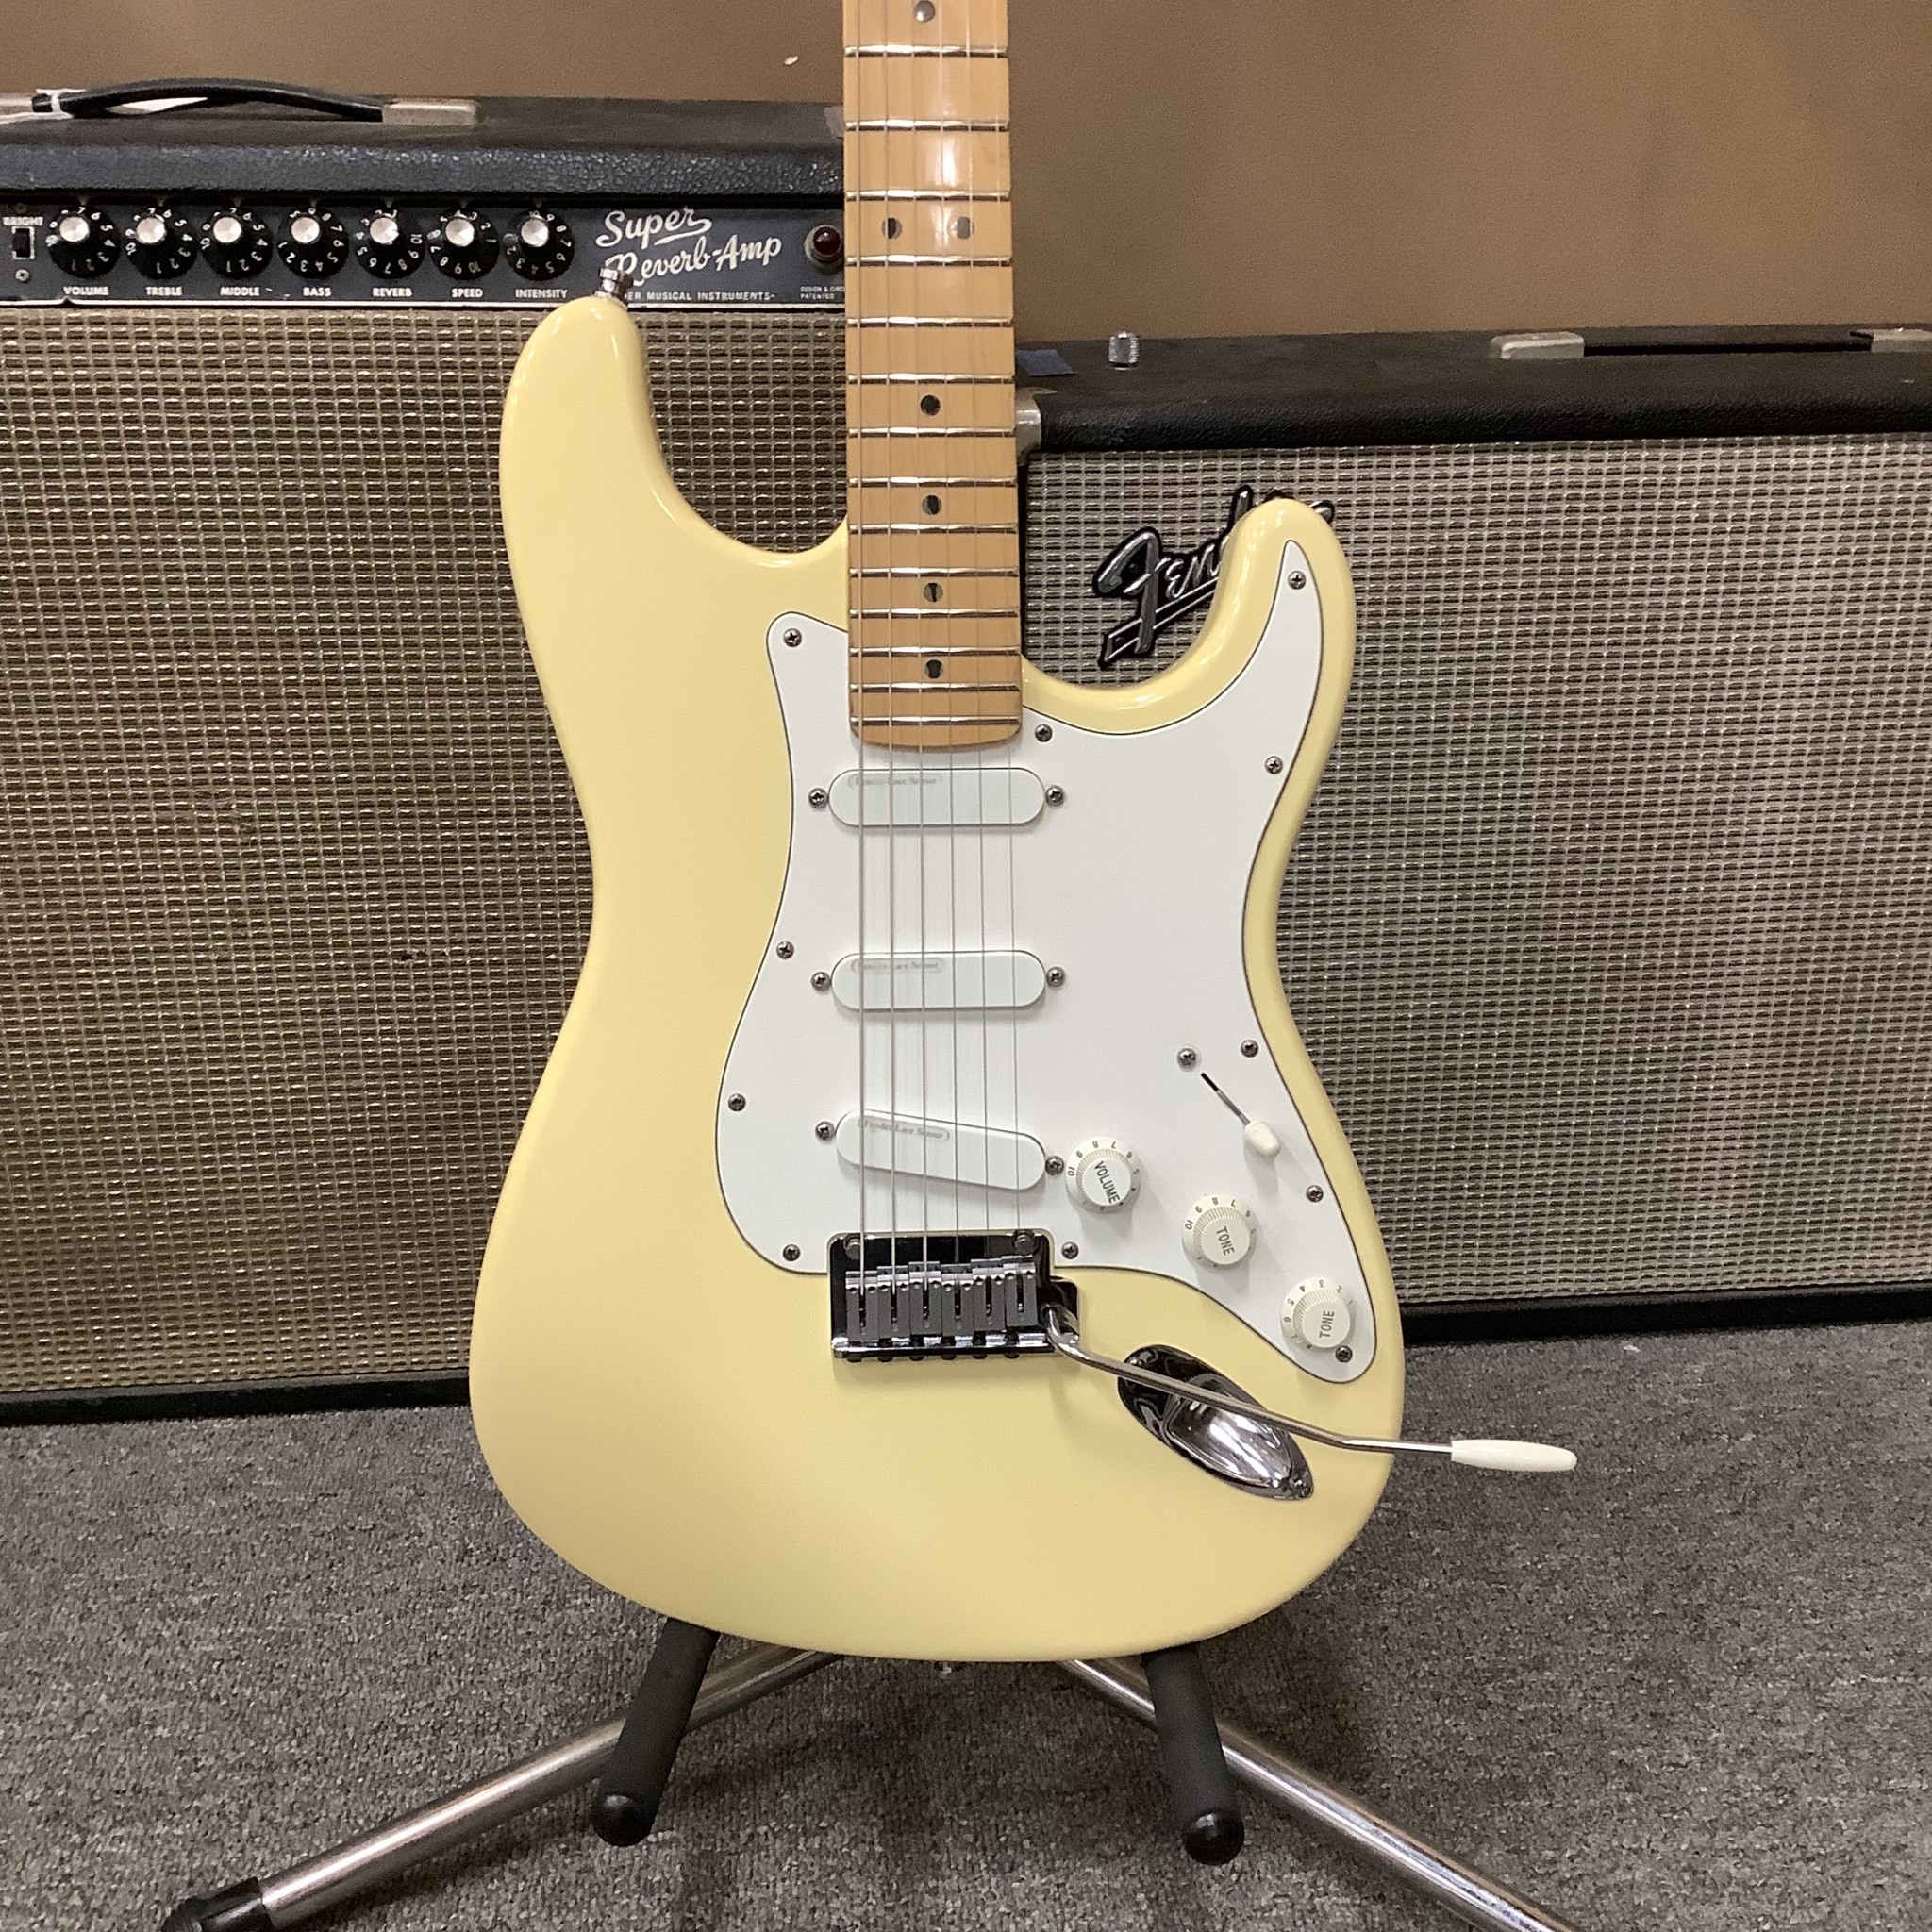 White stratocaster. FGN White Stratocaster. Fender Anniversary. Stratocaster White cre. Fender Anniversary наклейка.